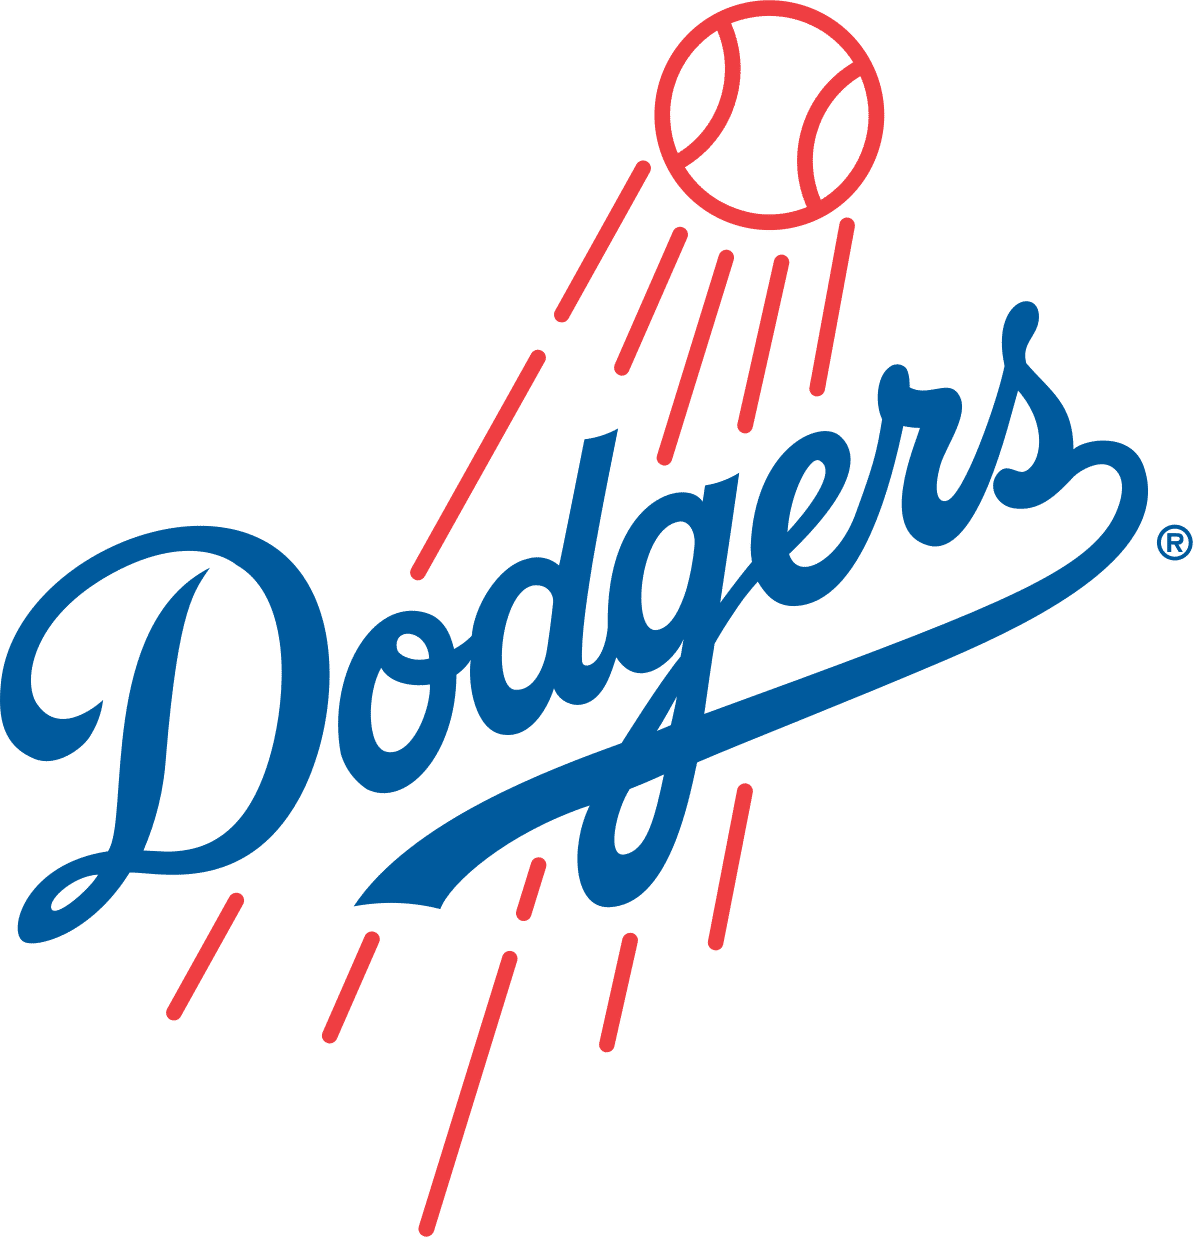 Los Angeles Dodgers - Wikipedia